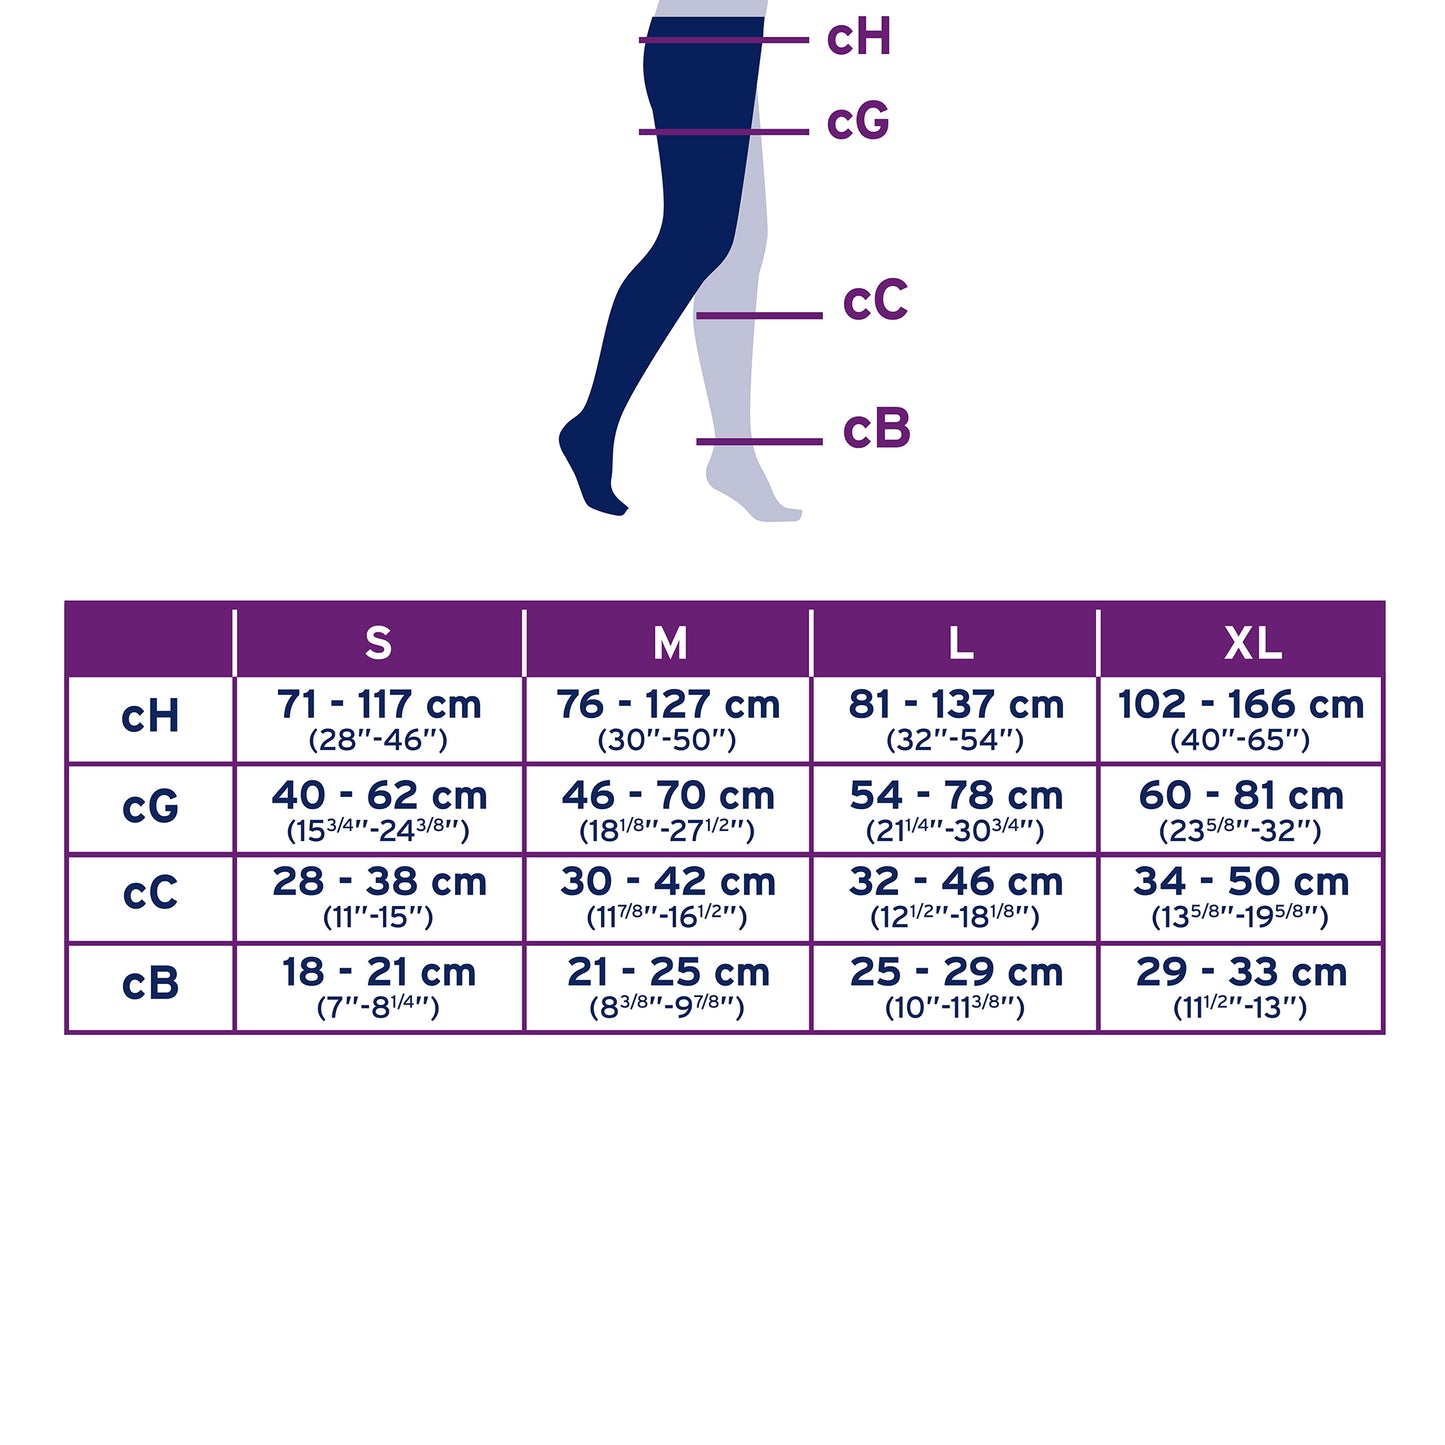 JOBST Relief Compression Stockings 20-30 mmHg Chap Single Leg Open Toe